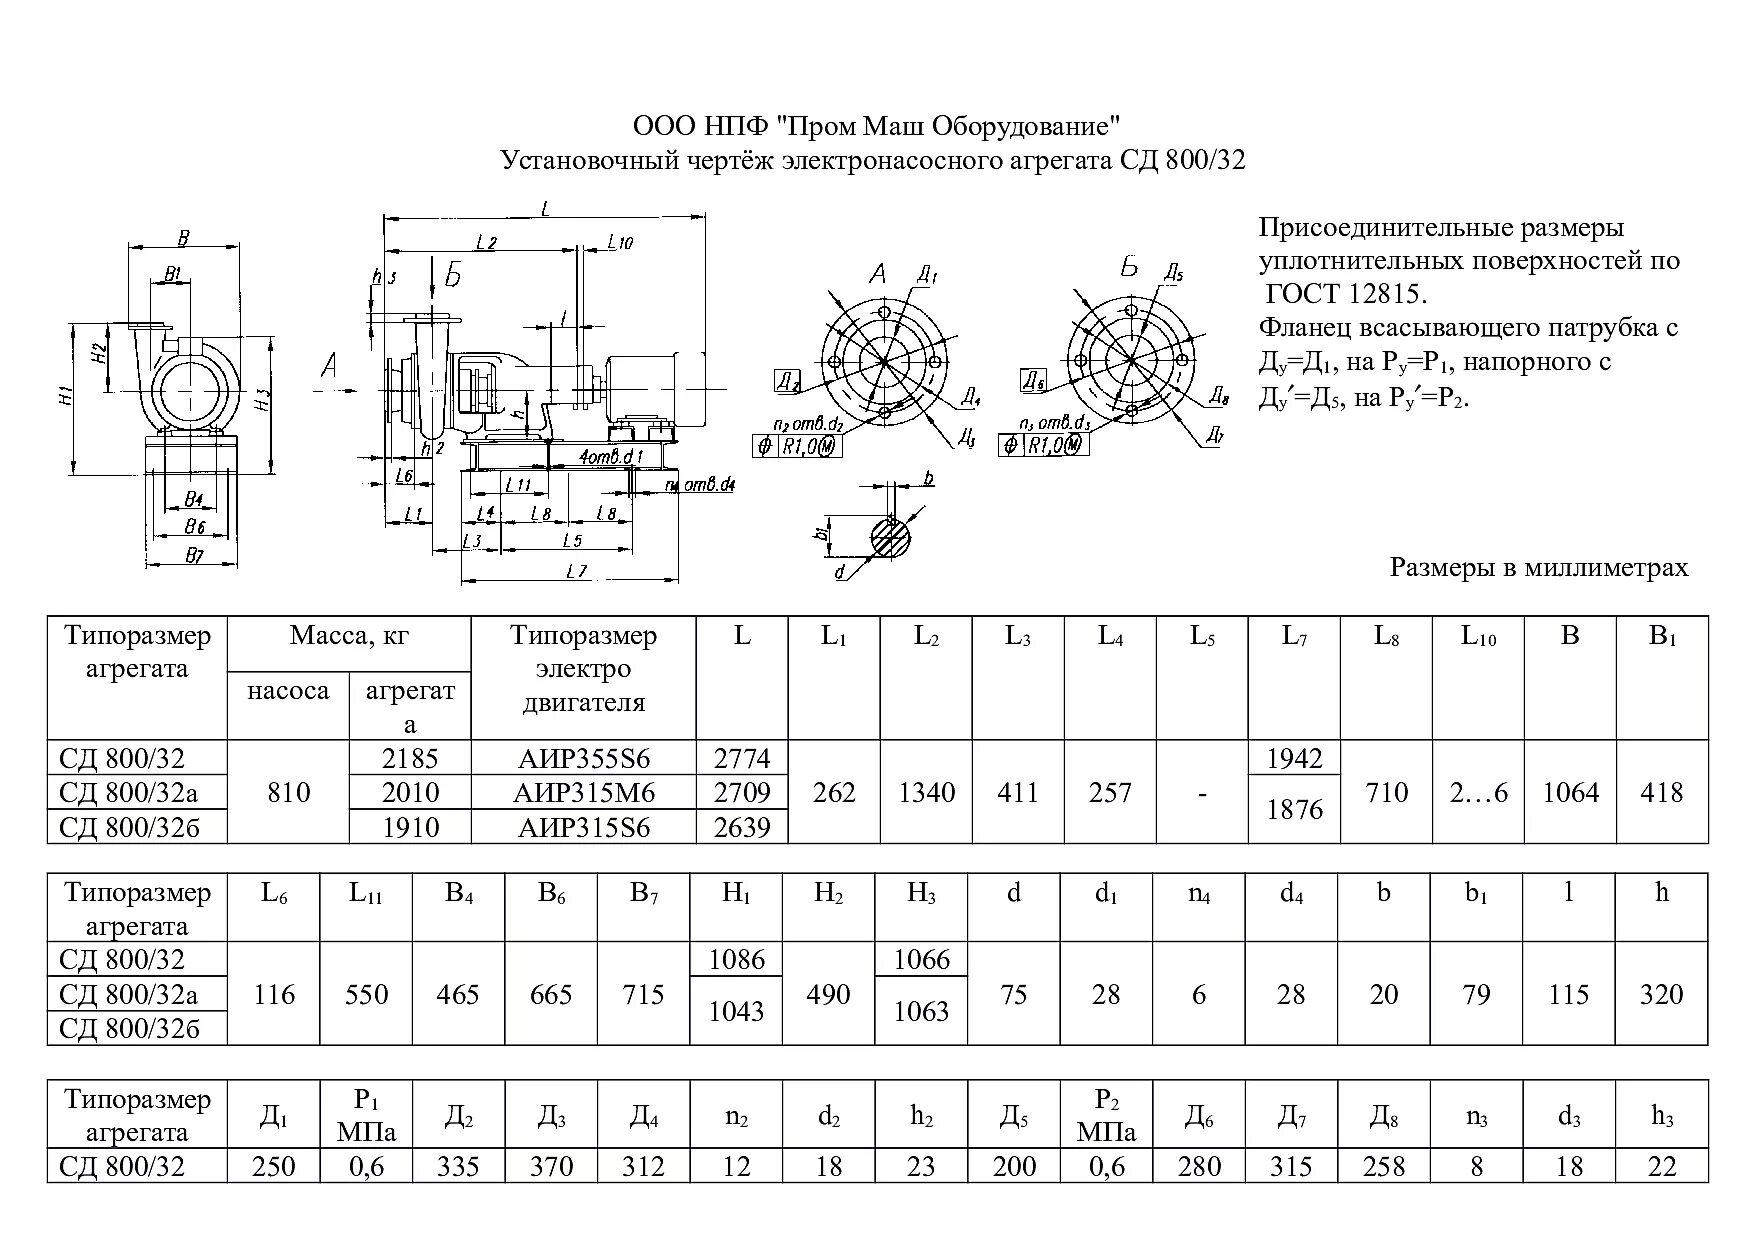 Насос 1сд 2400/75 габаритный чертеж. Технические характеристики насосного агрегата СД 800-32а. Габаритный чертеж насоса СД 800/32. Насос СД 250 22.5 технические характеристики.